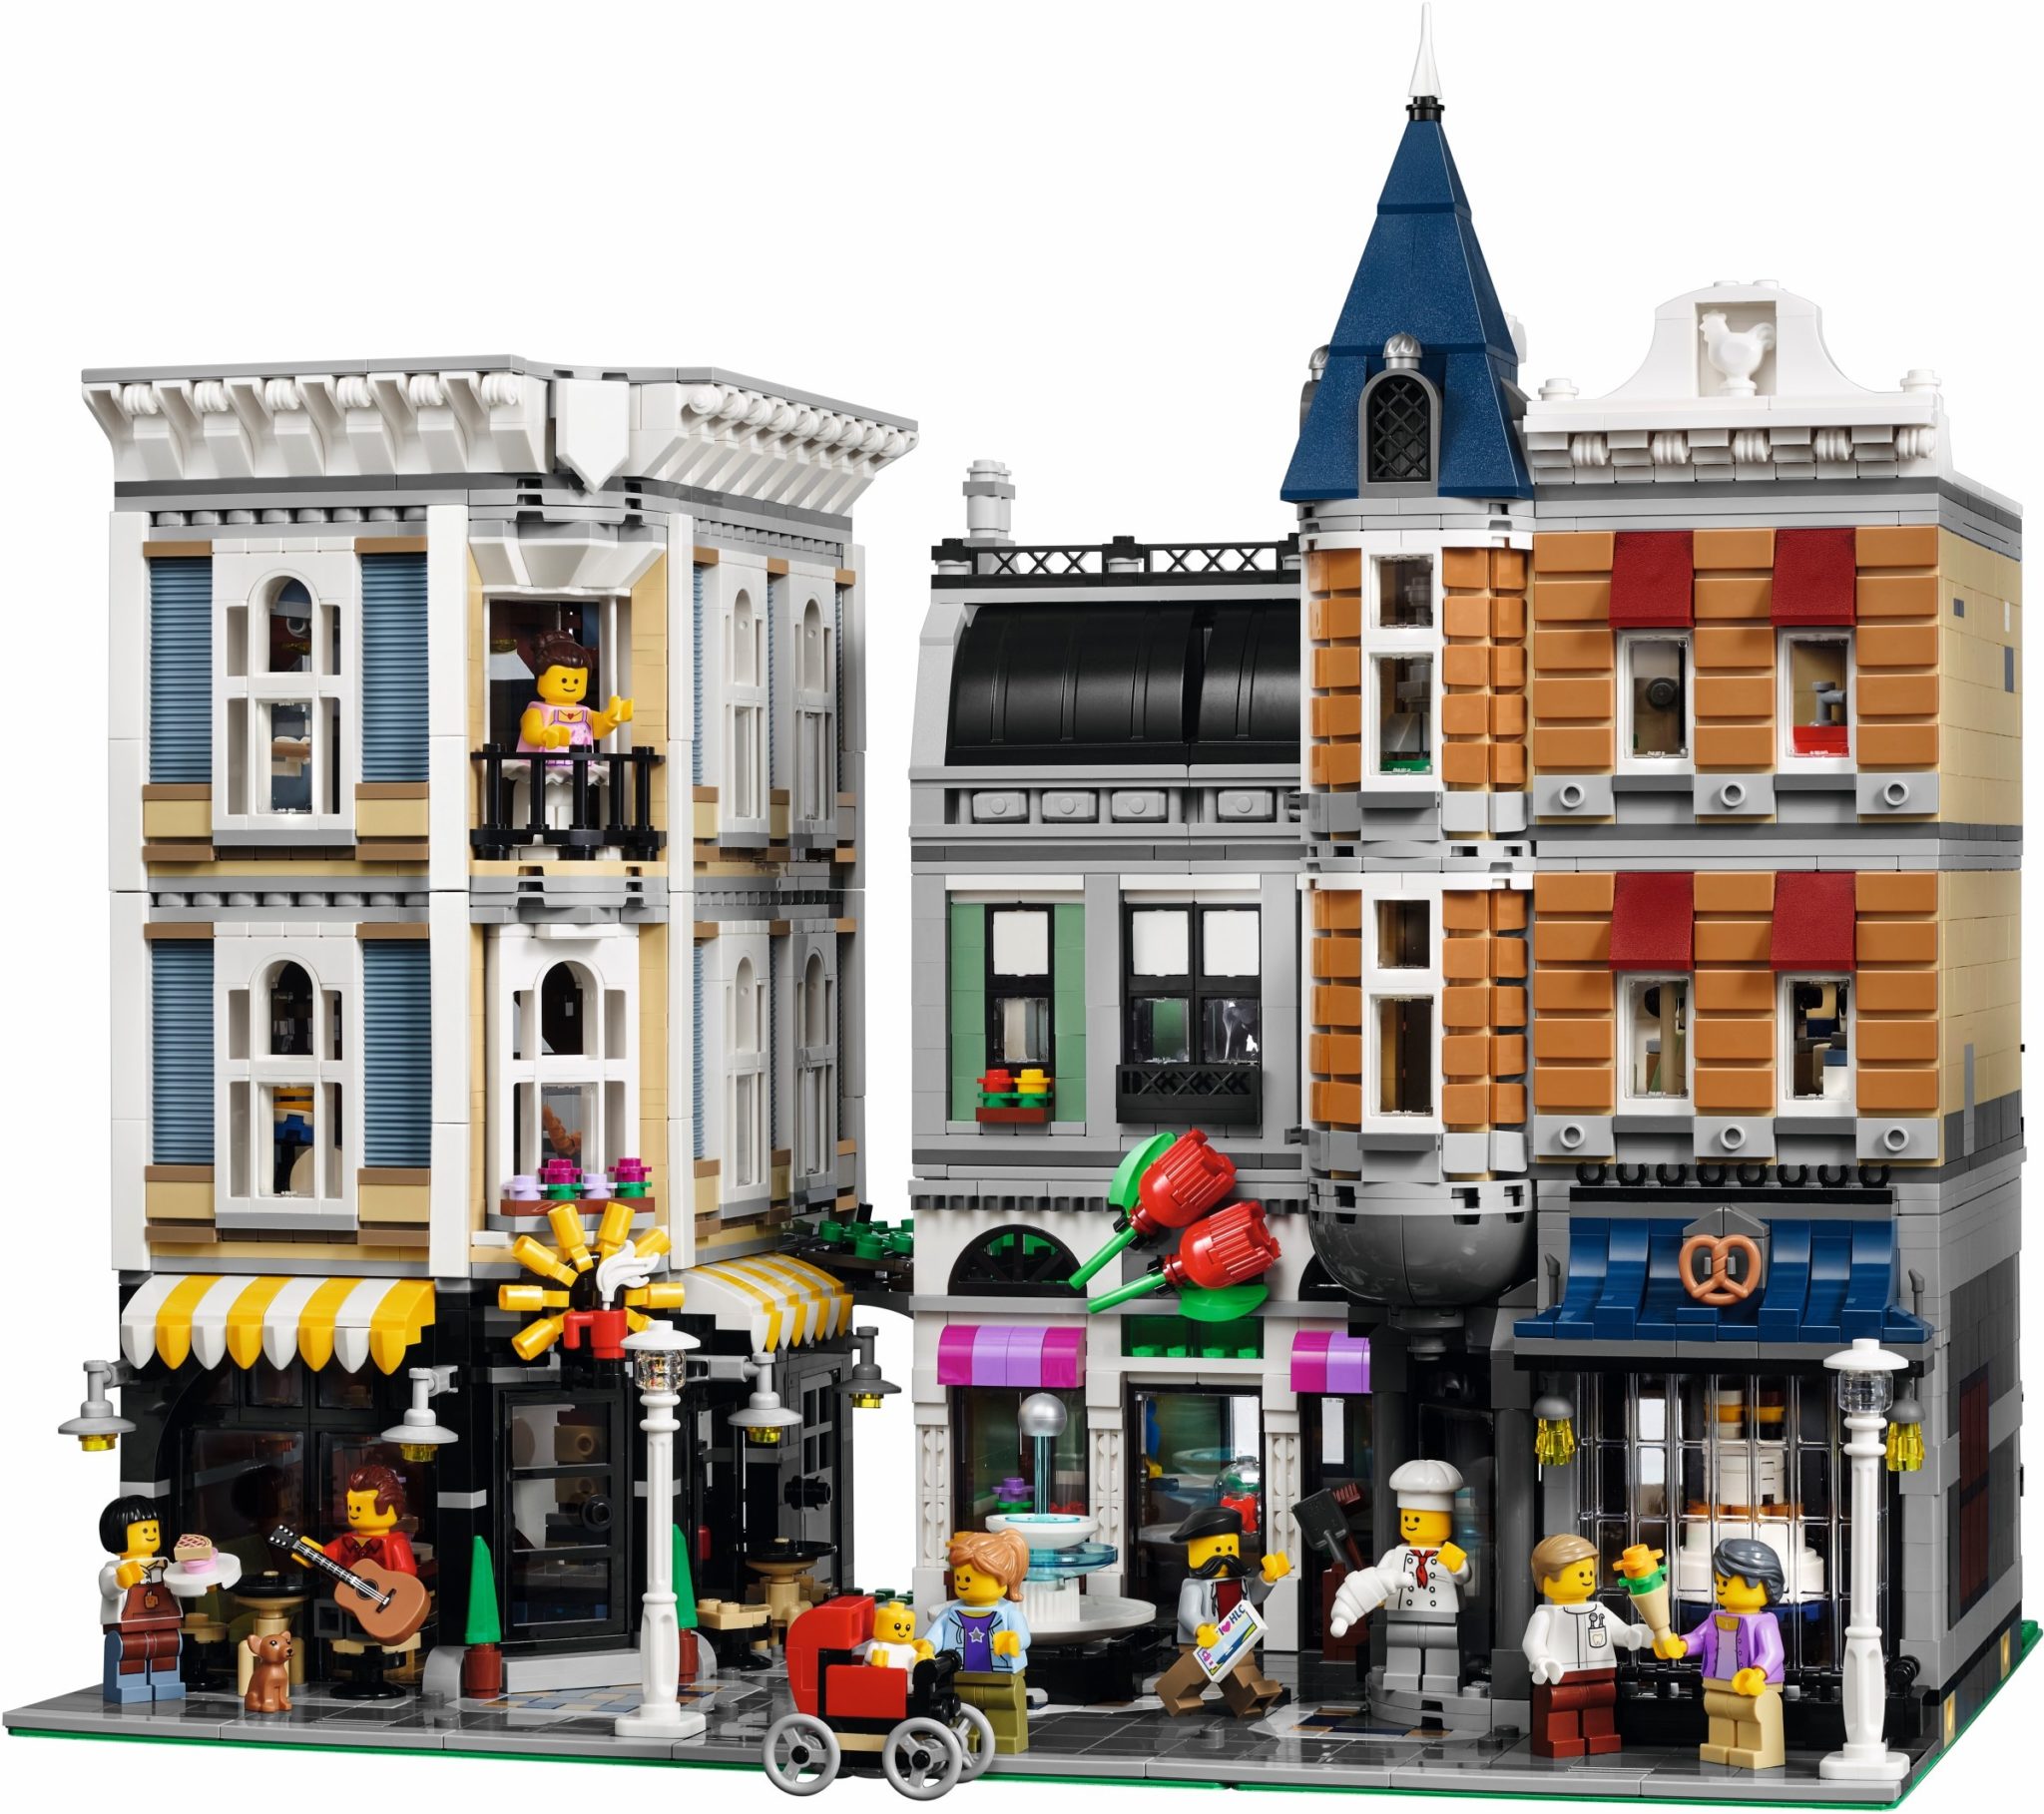 LEGO 10255 Stadtleben